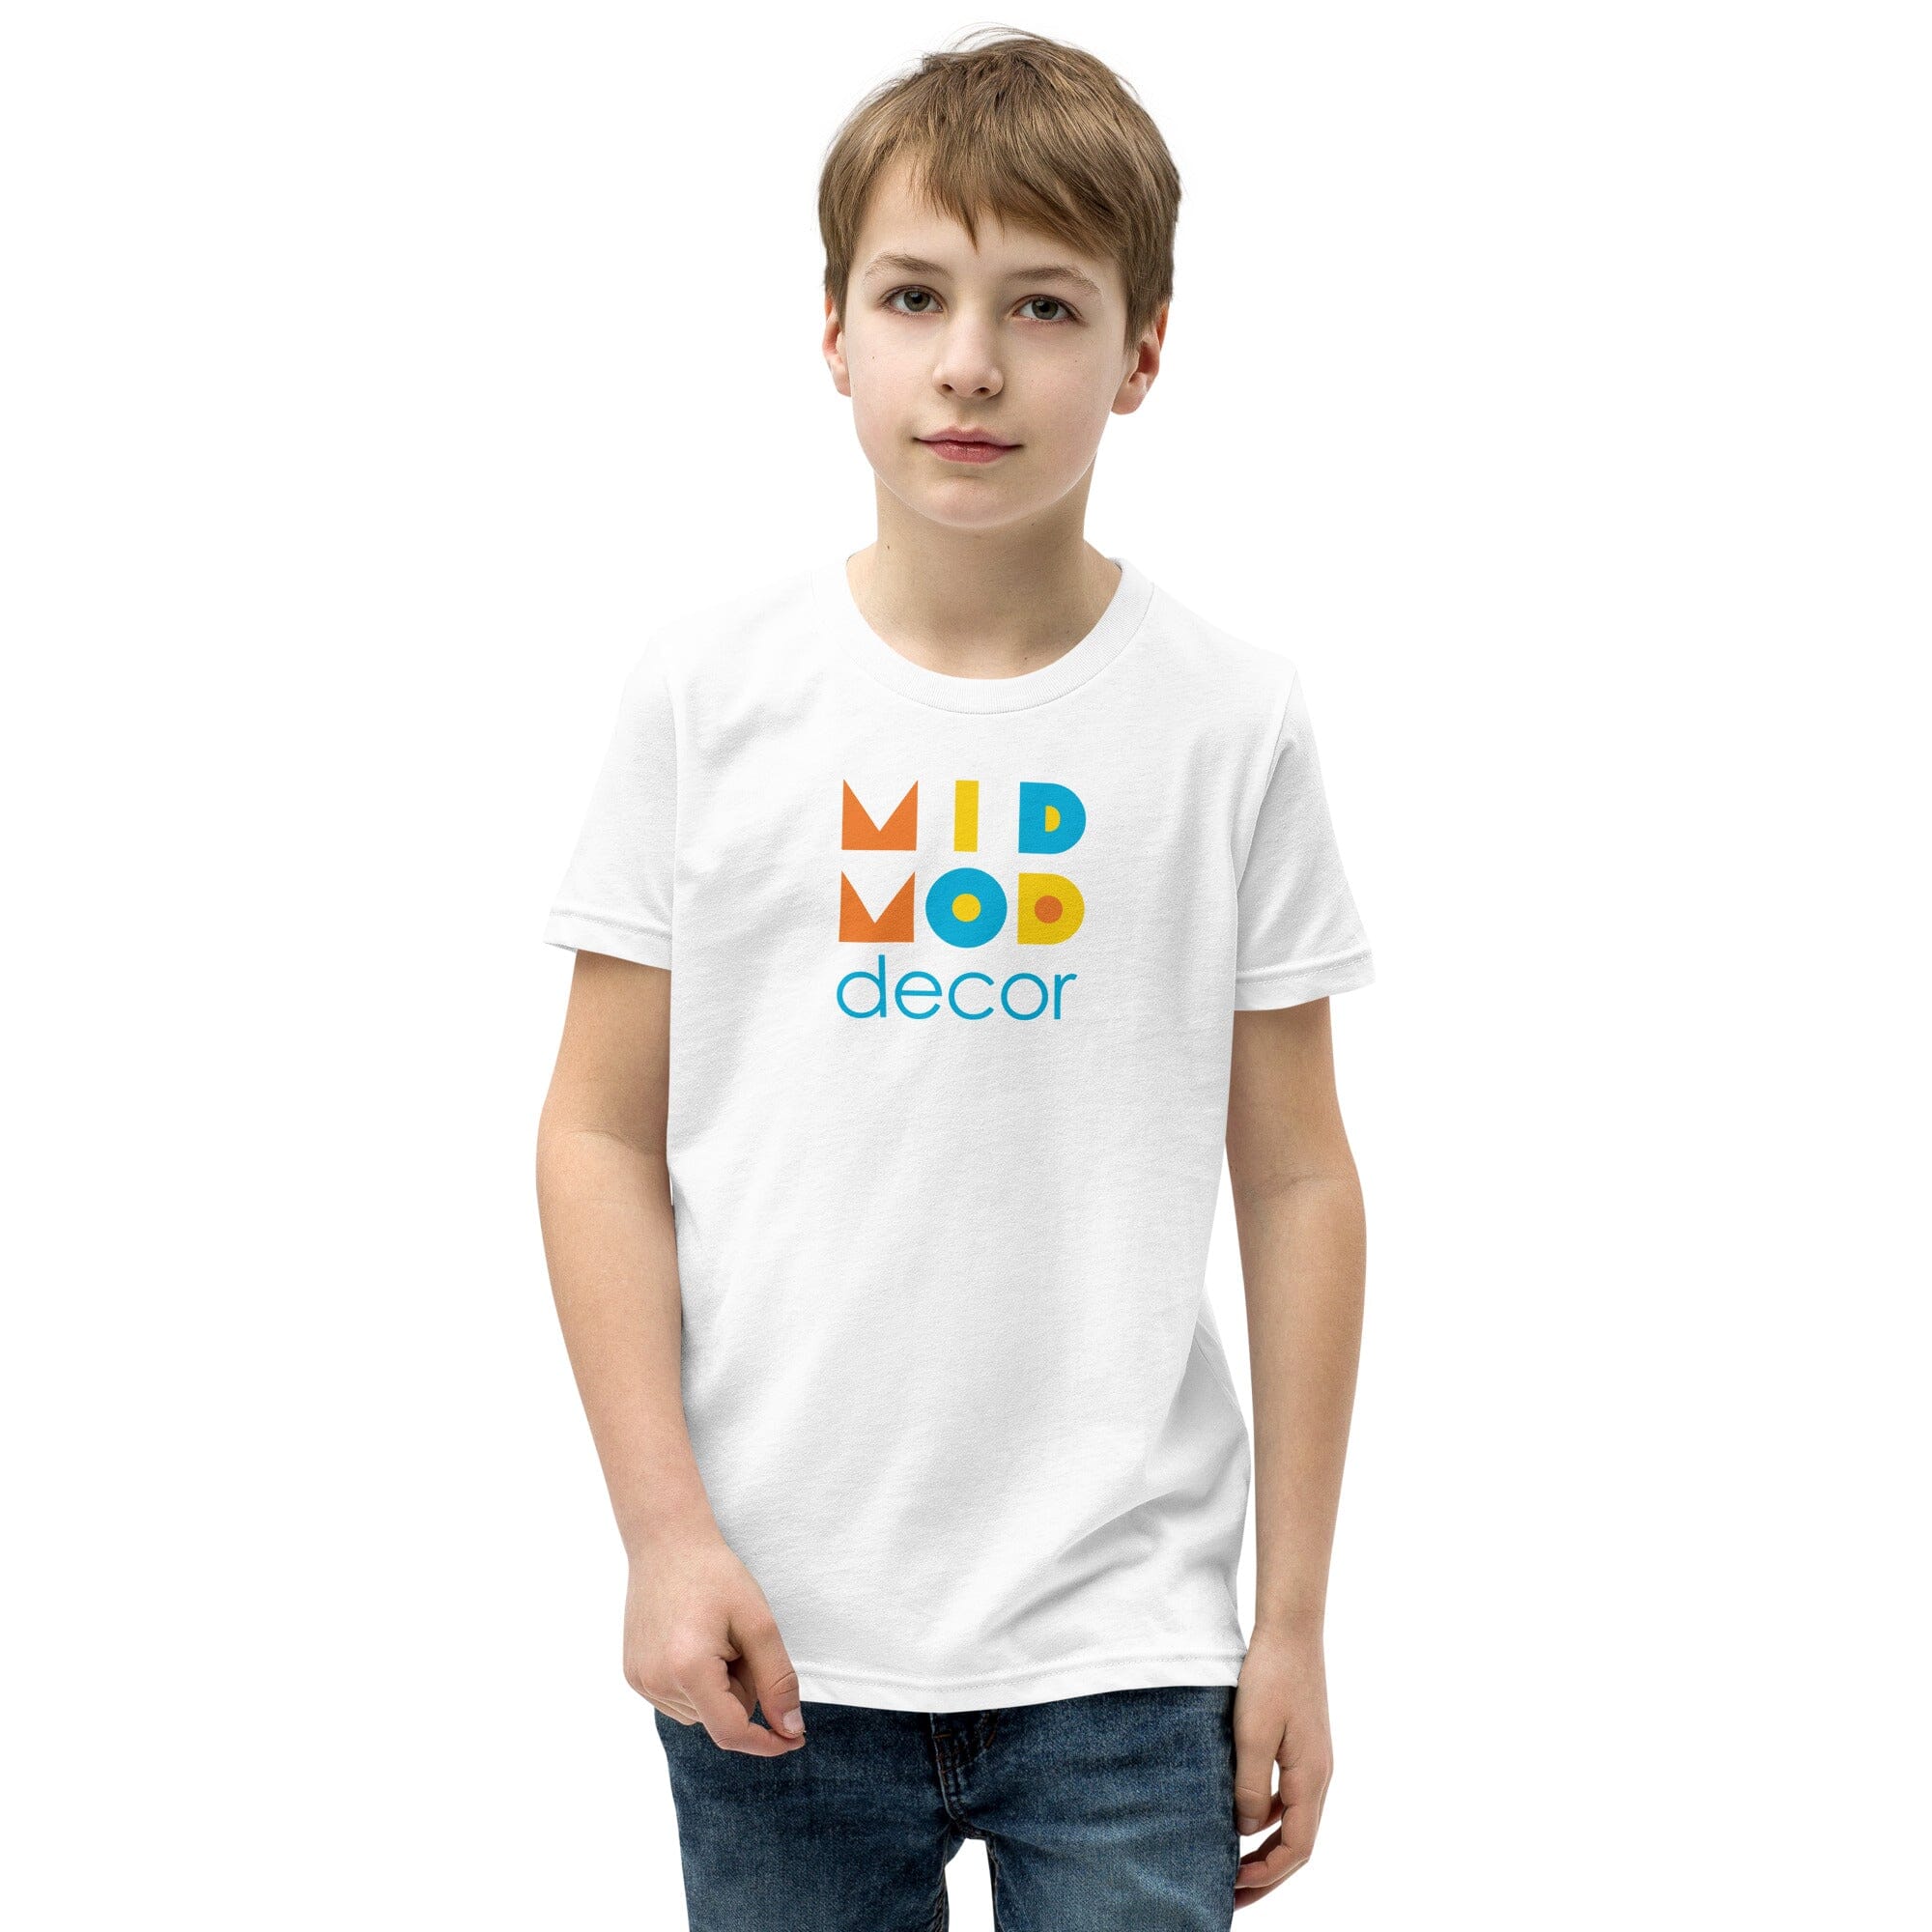 MidMod Decor - Youth Short Sleeve T-Shirt MidMod Decor 